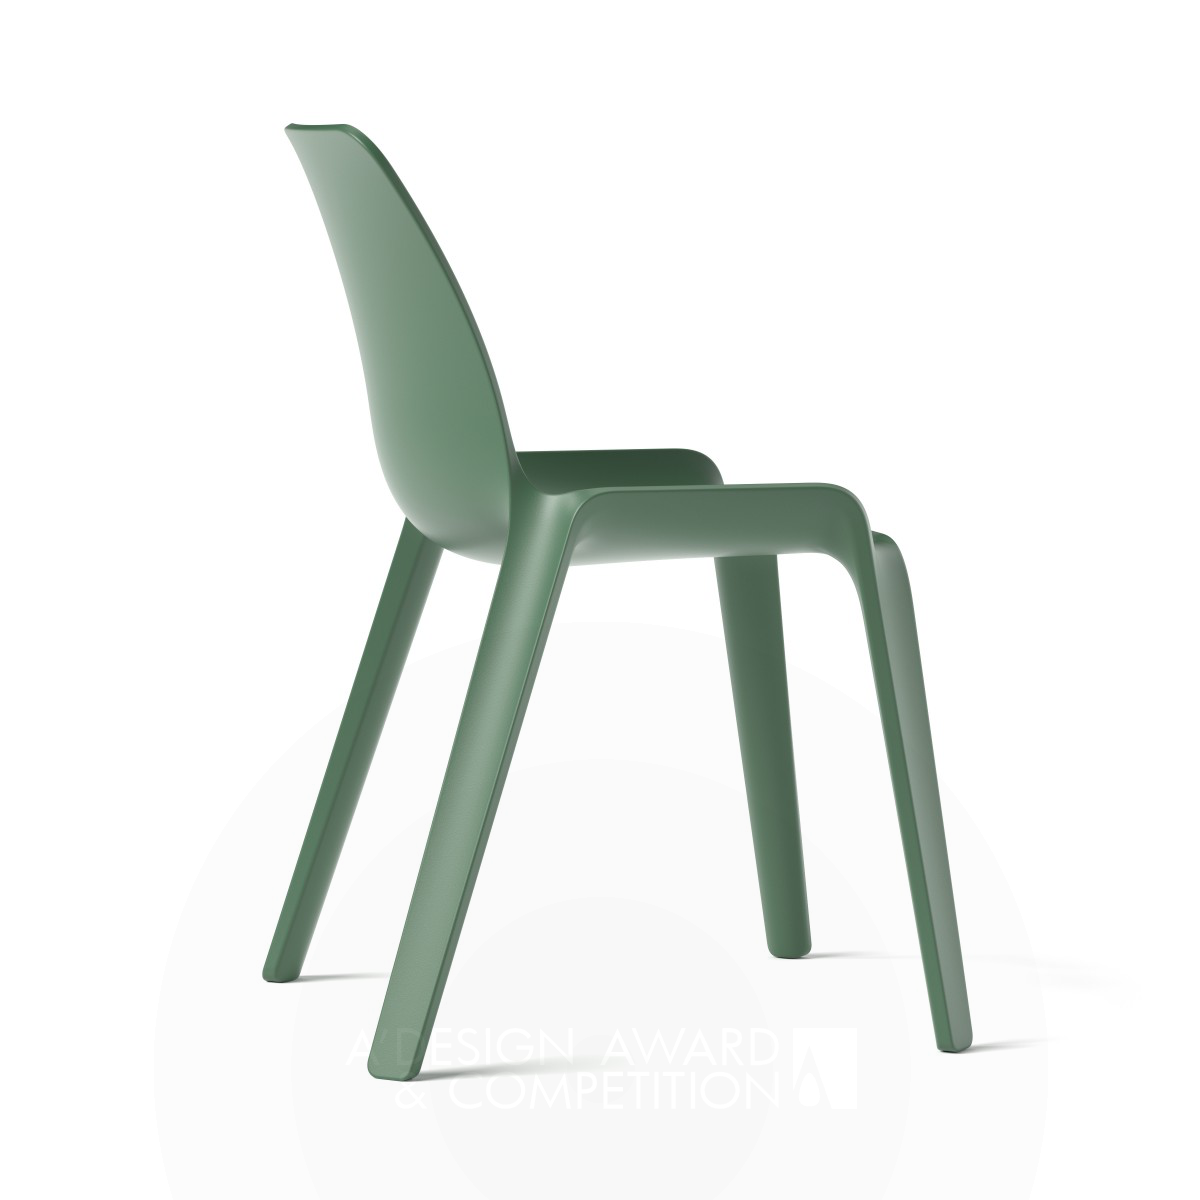 Revolutionizing Seating: The Pinch Chair by Medium2 Studio